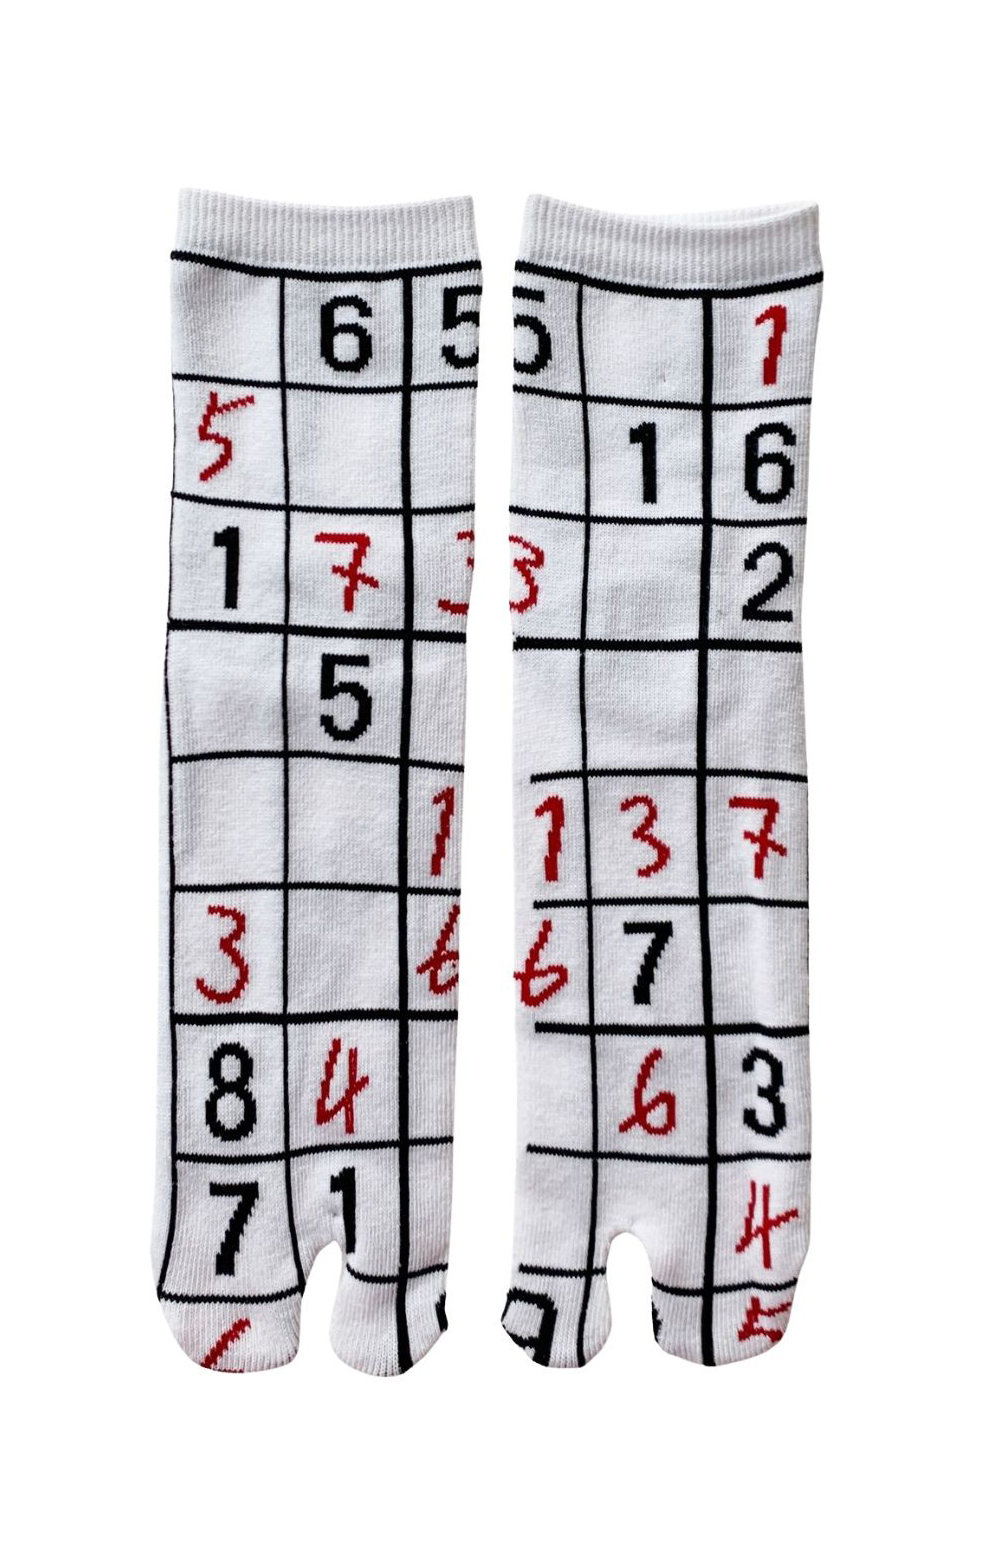 1642 sudoku tabi toe socks